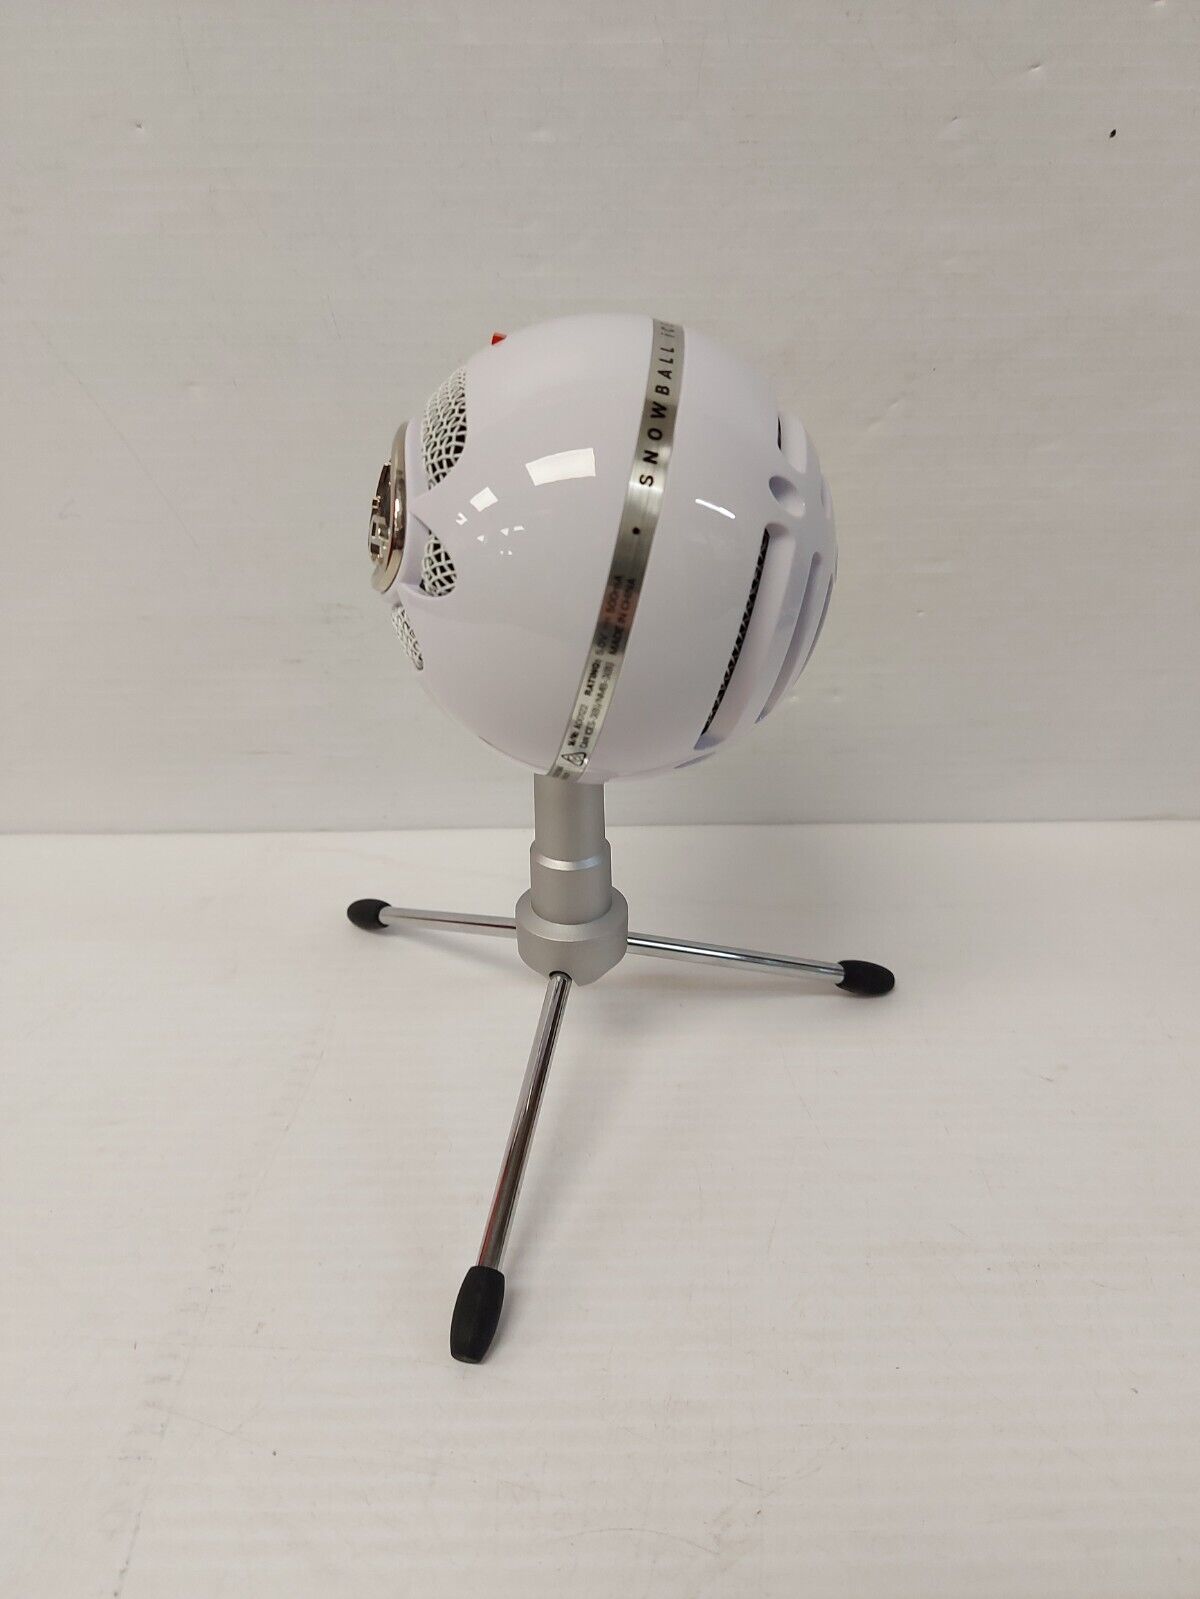 (N81525-7) Blue A00122 Snowball Microphone w/ USB and Tripod